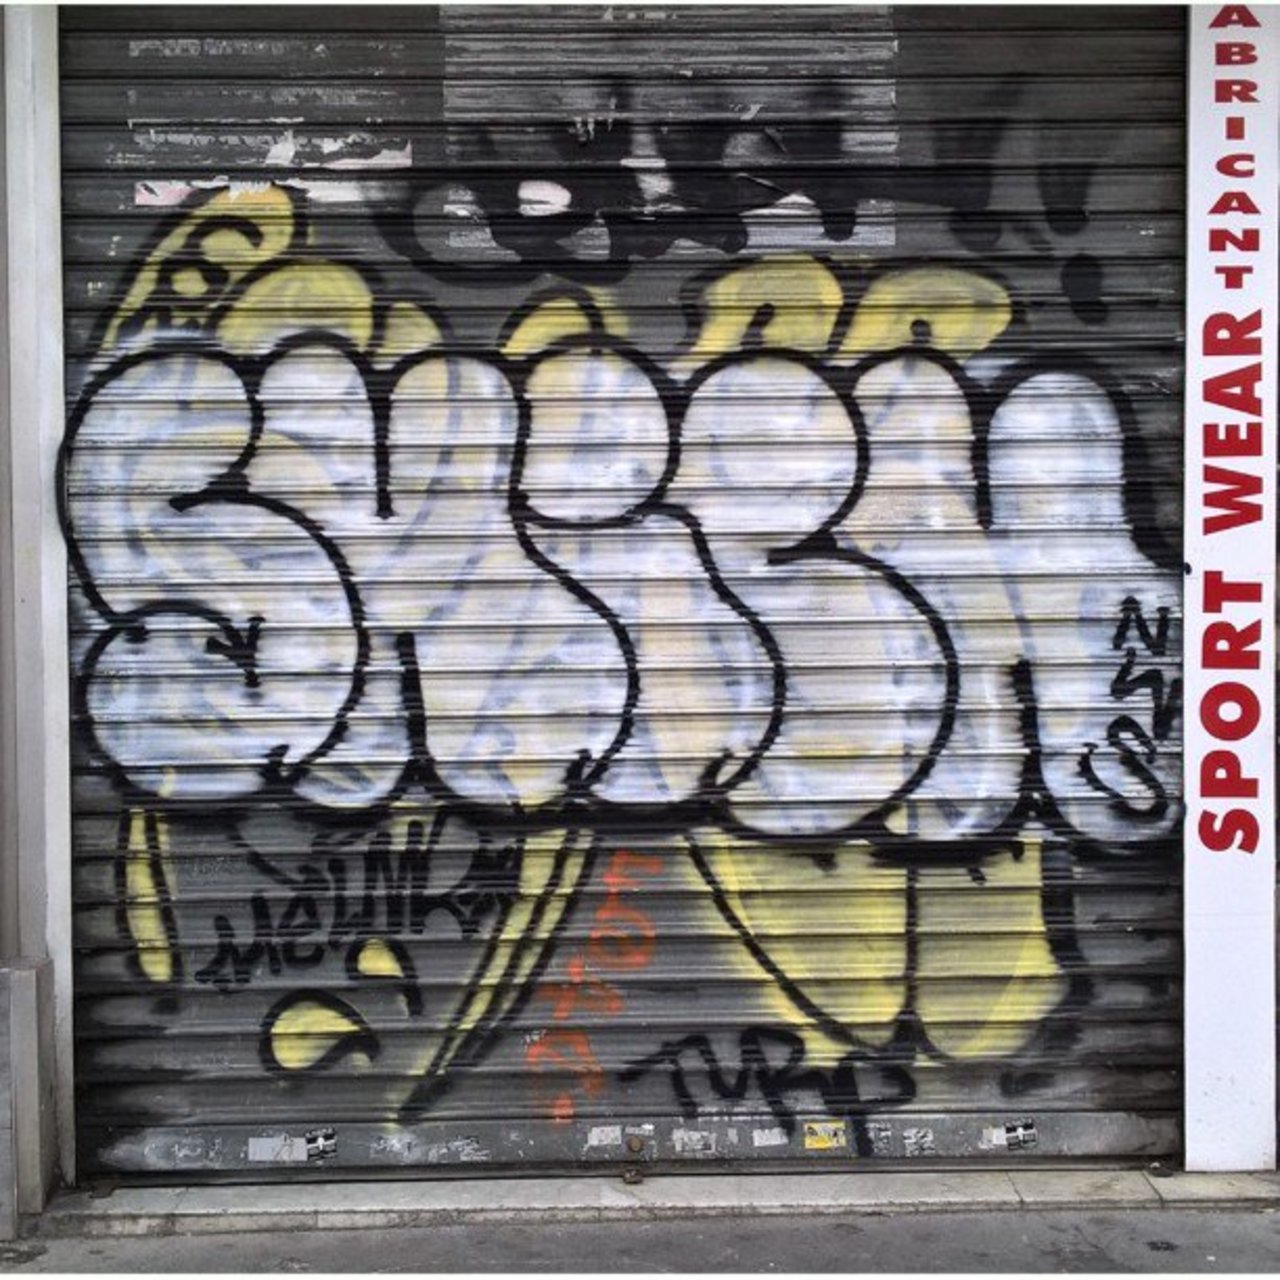 #Paris #graffiti photo by @maxdimontemarciano http://ift.tt/1hXAc4h #StreetArt https://t.co/L25jbprOLg